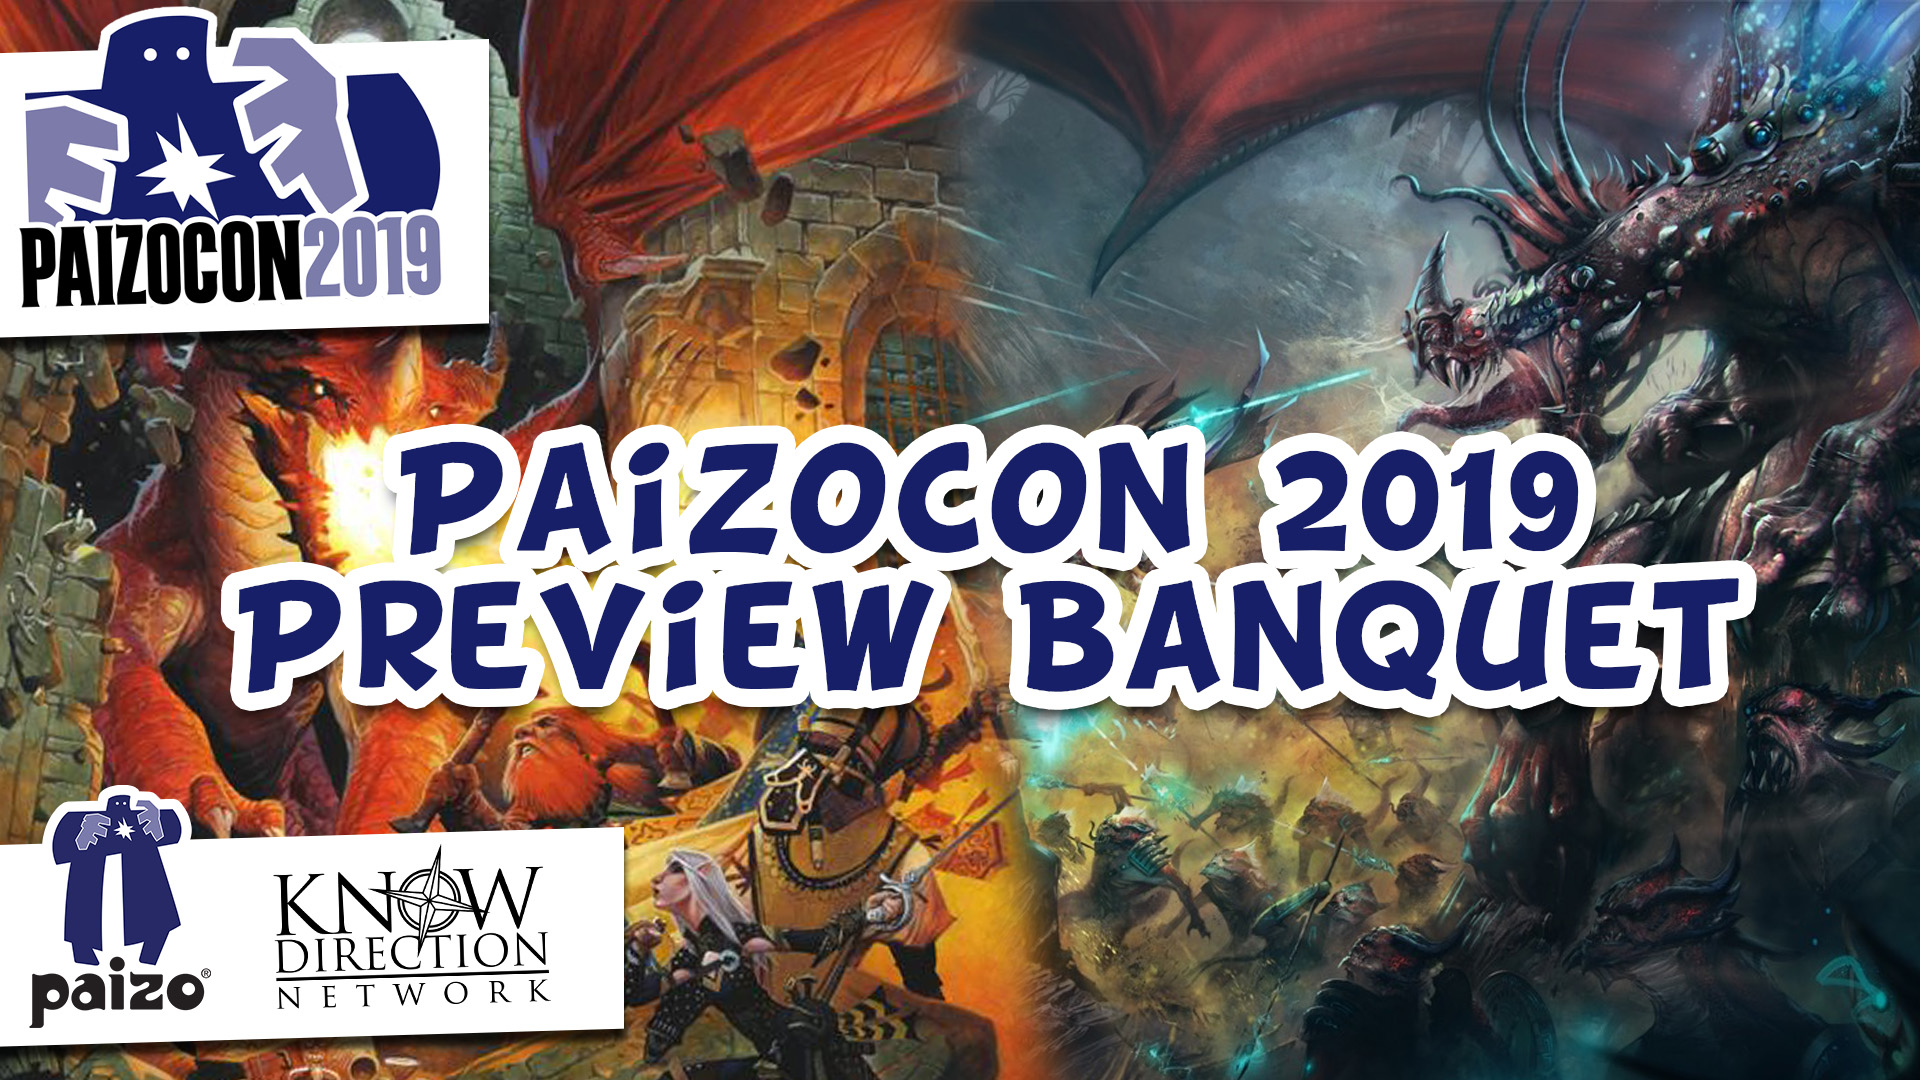 PaizoCon 2019 Preview Banquet